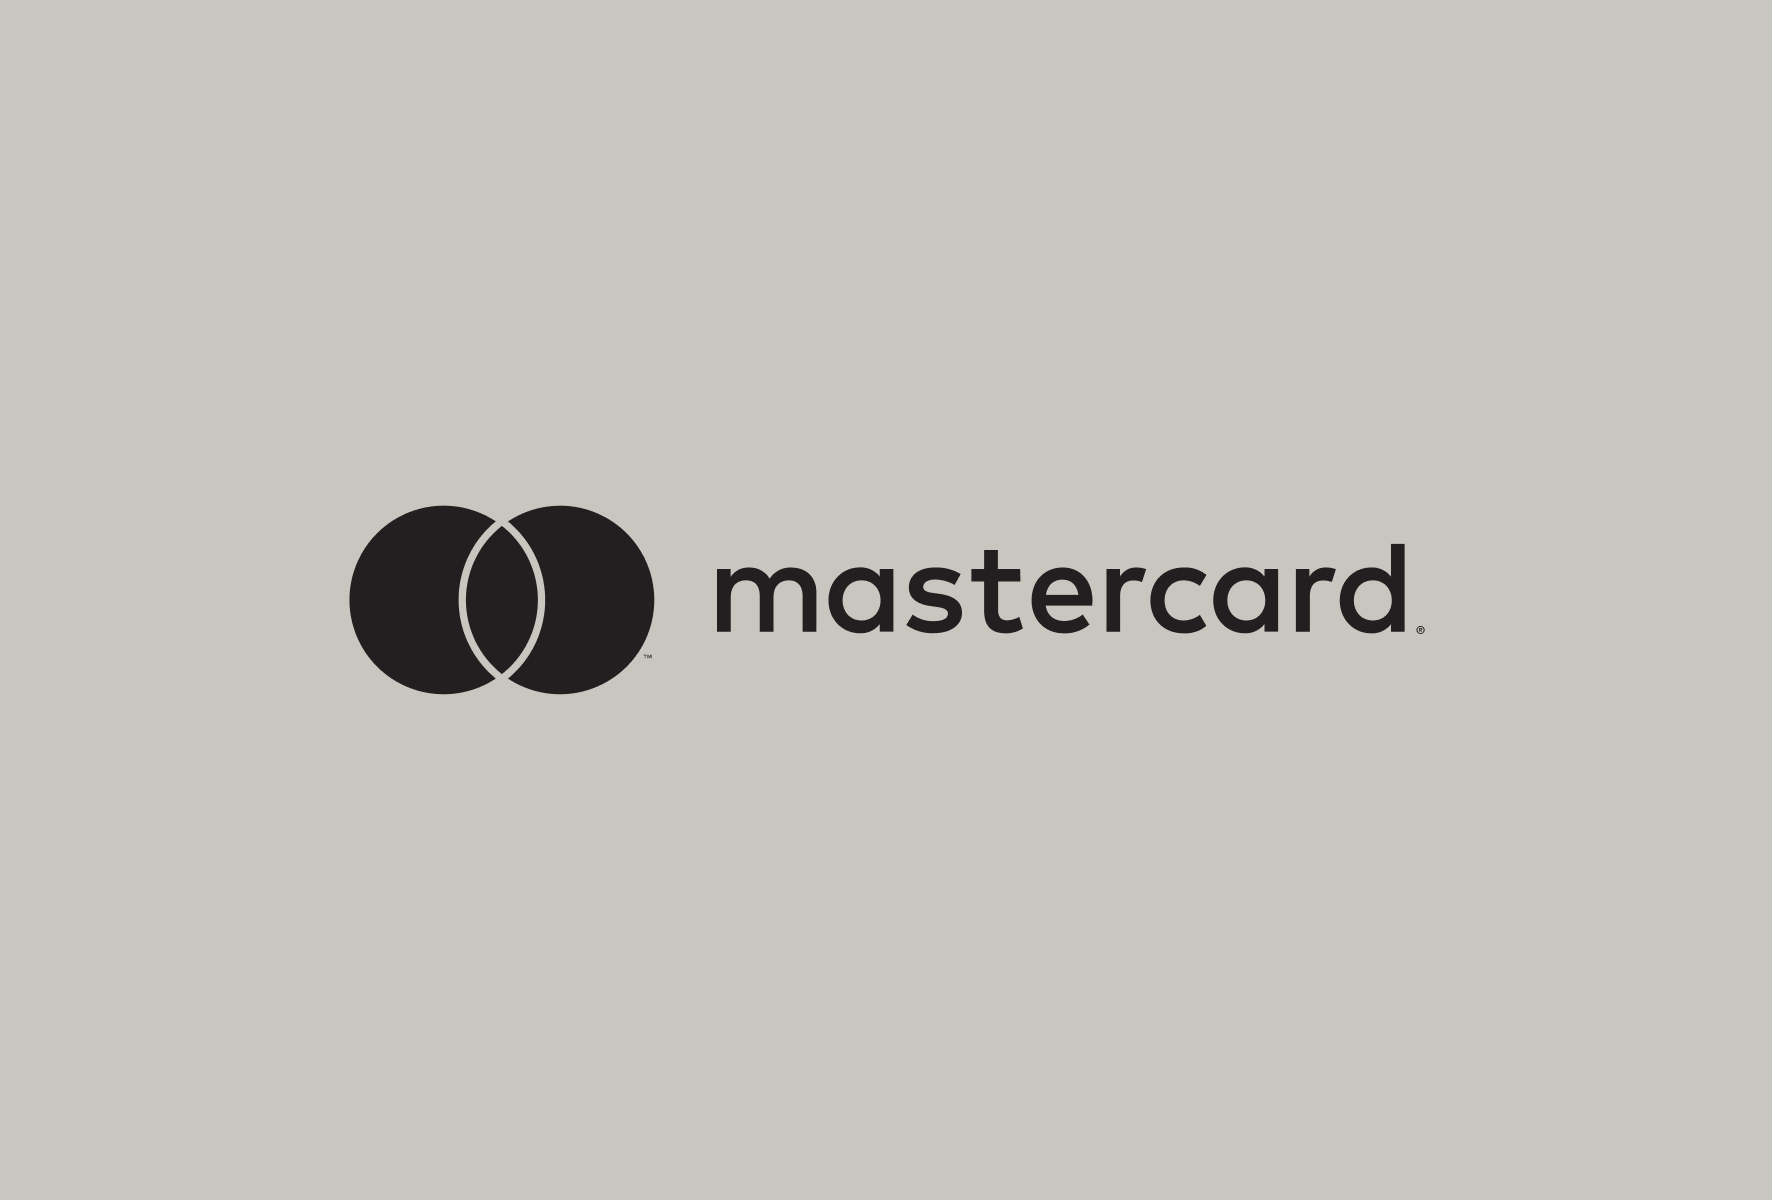 Famous Logos part V - Mastercard